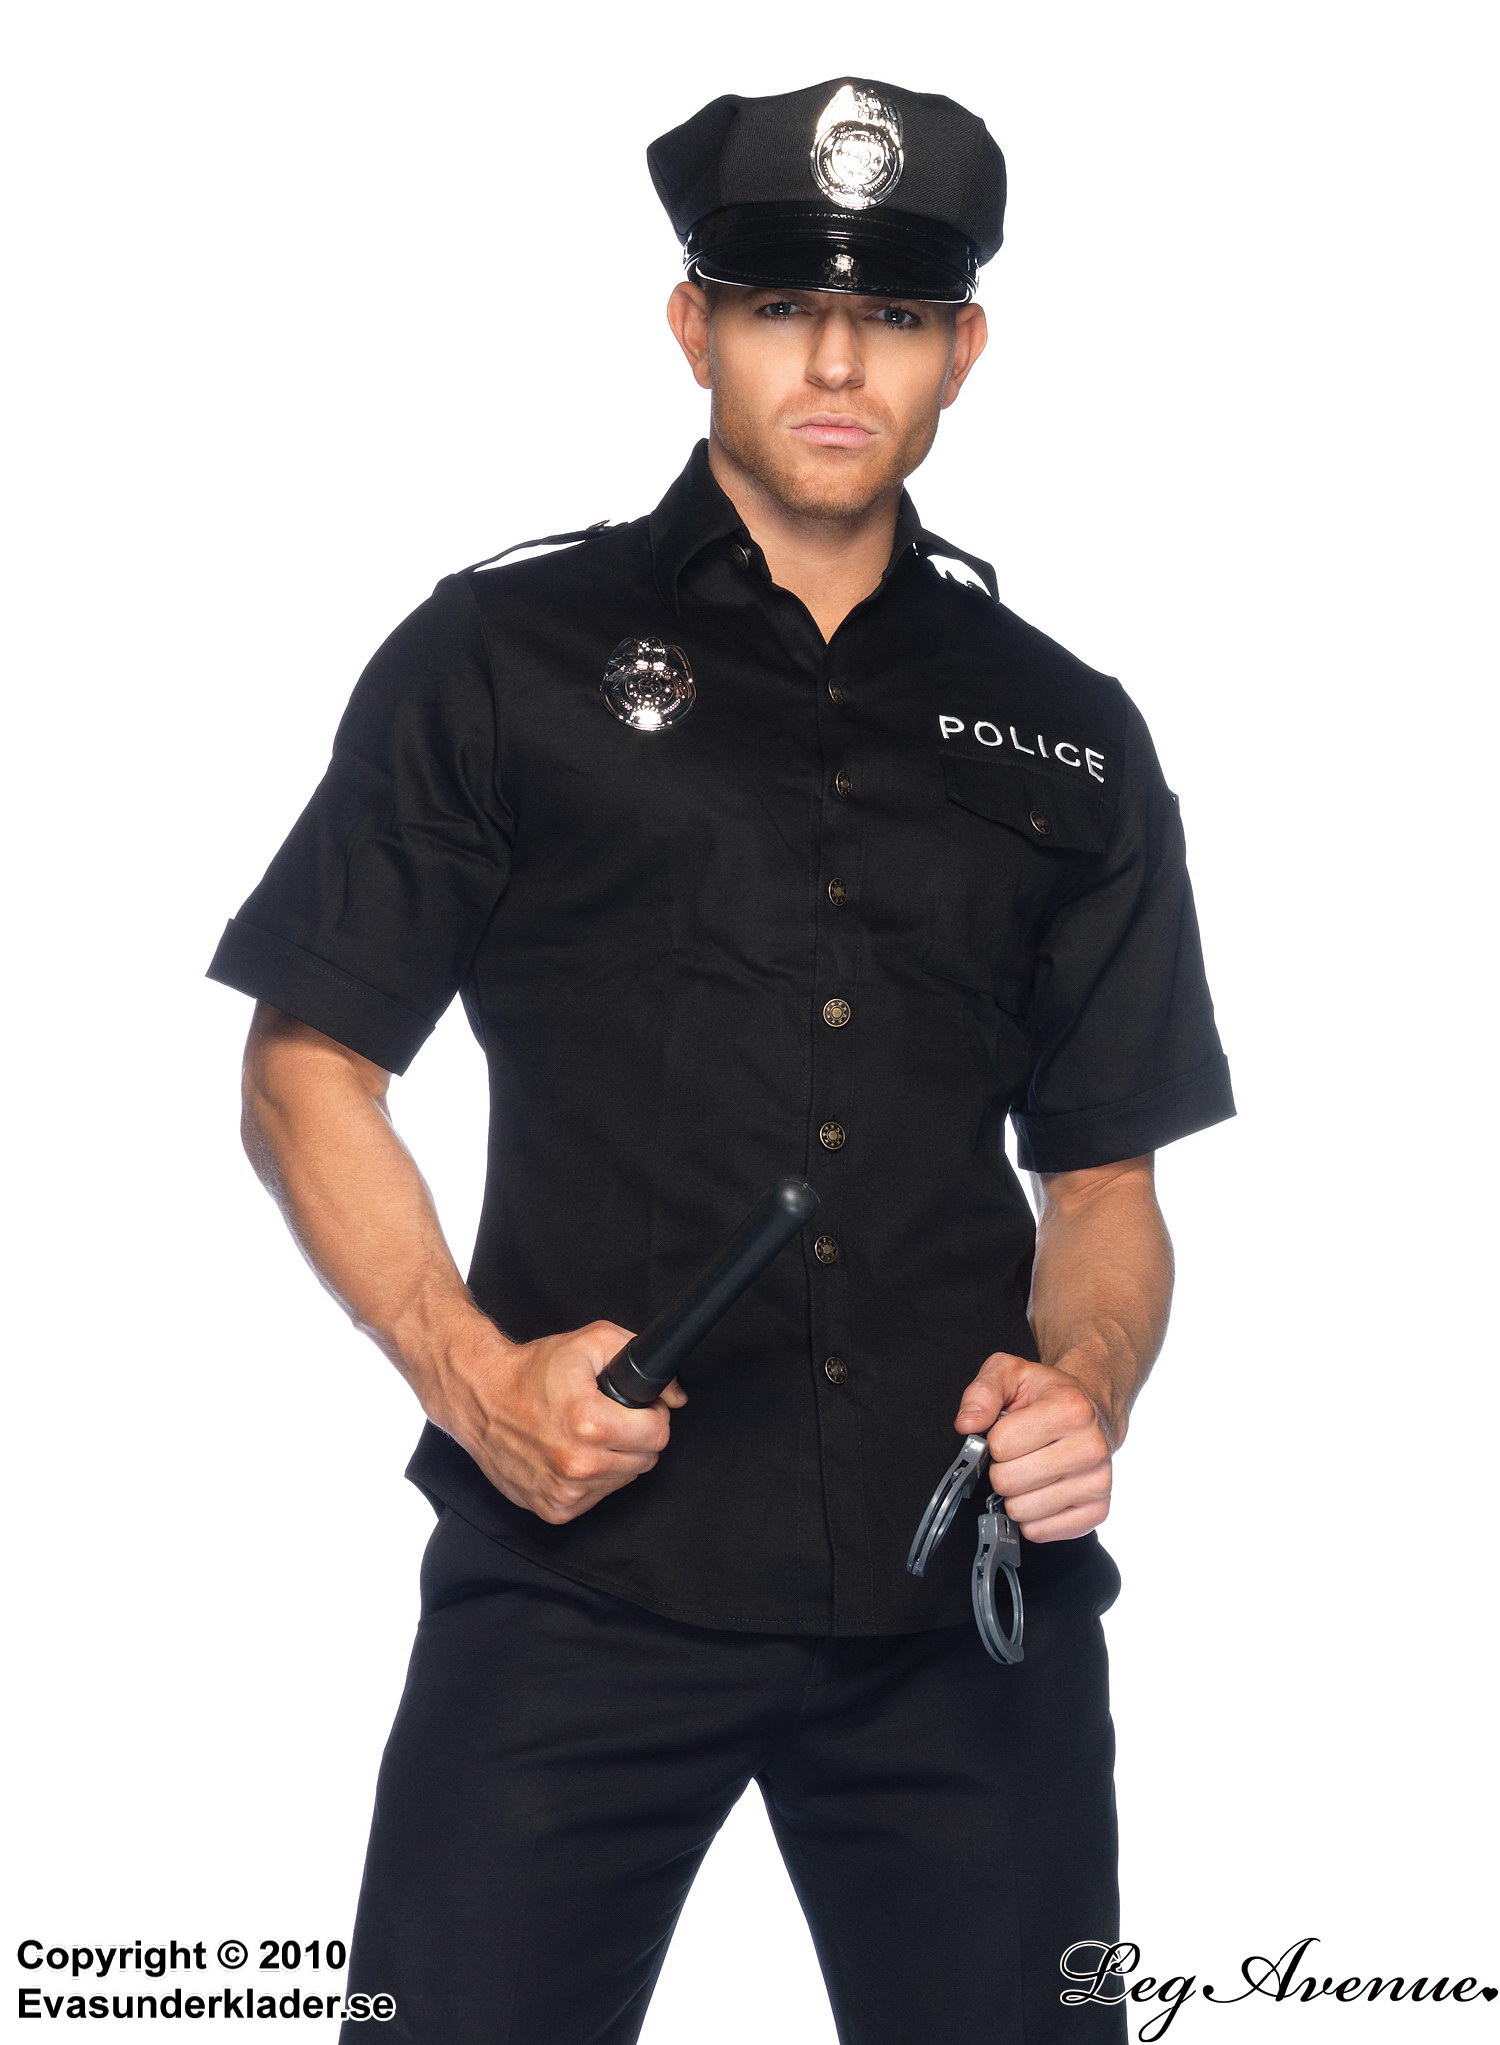 Police officer, costume set, short sleeves, buttons, pocket